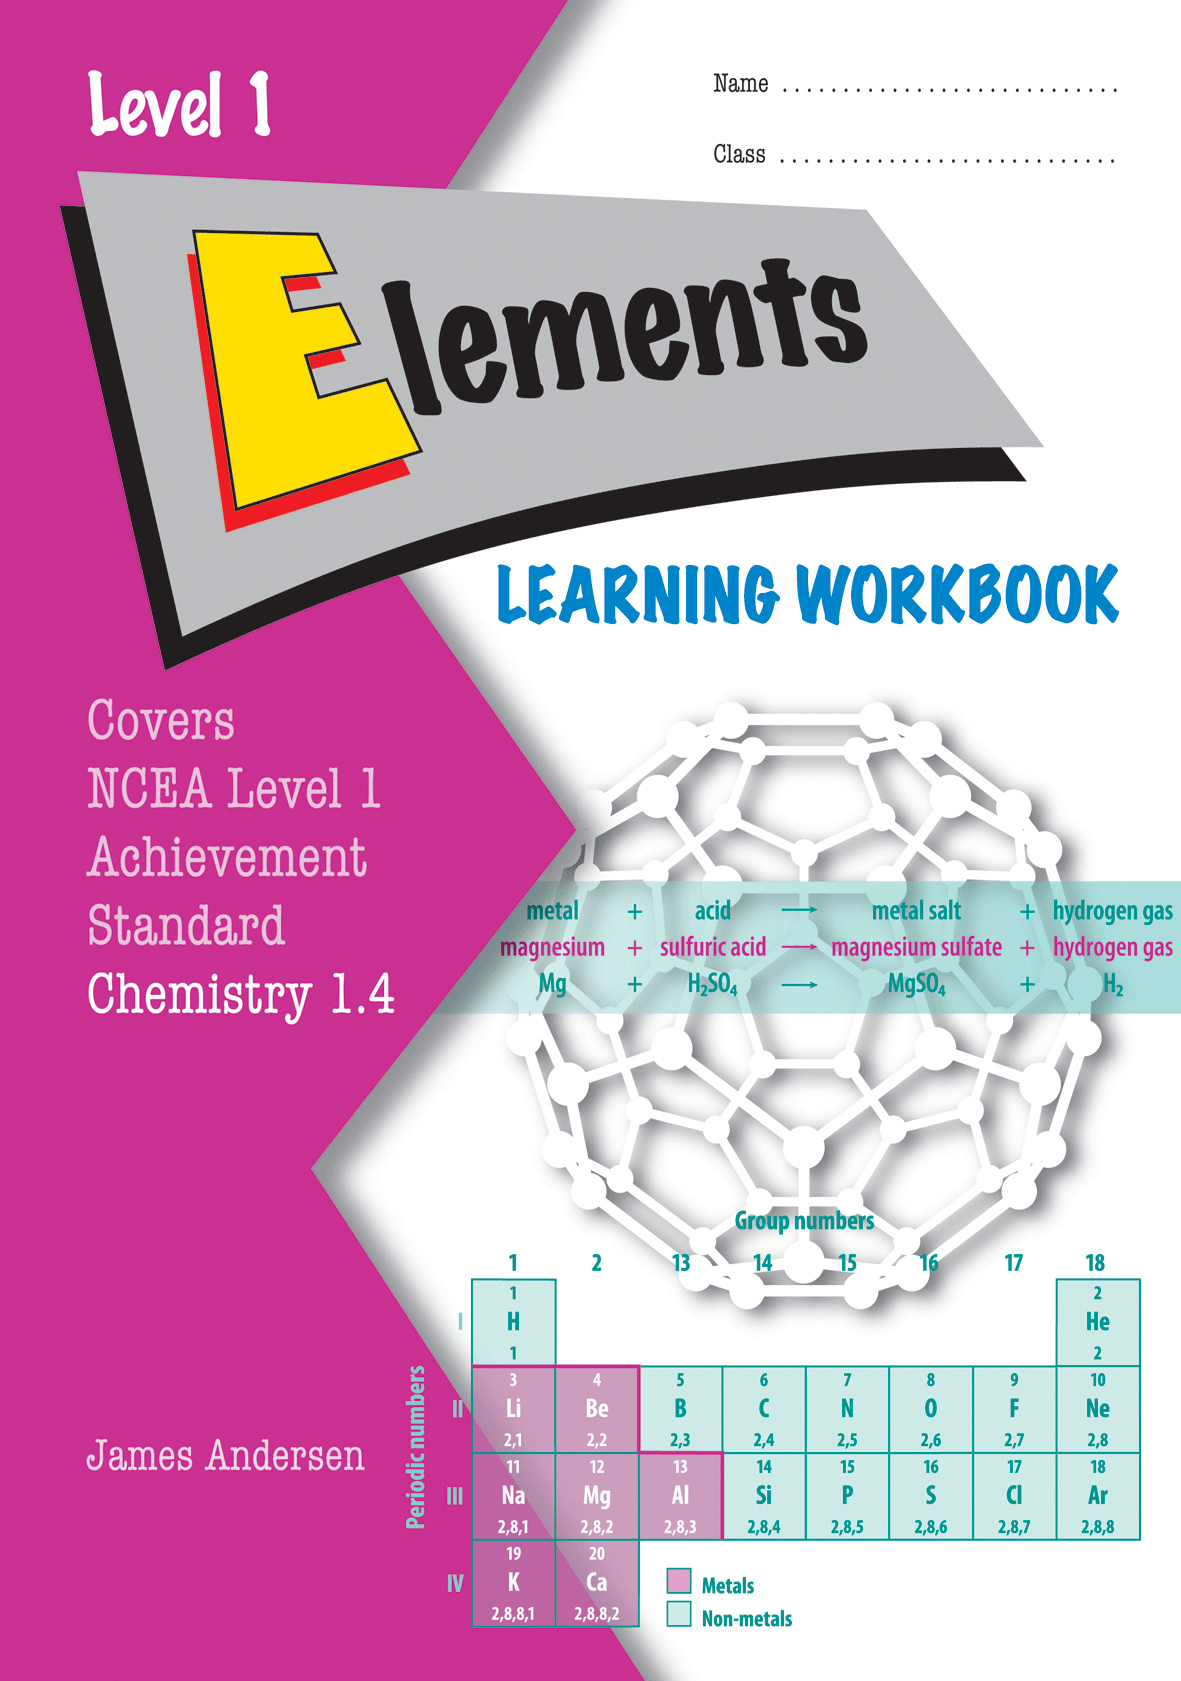 Level 1 Elements 1.4 Learning Workbook